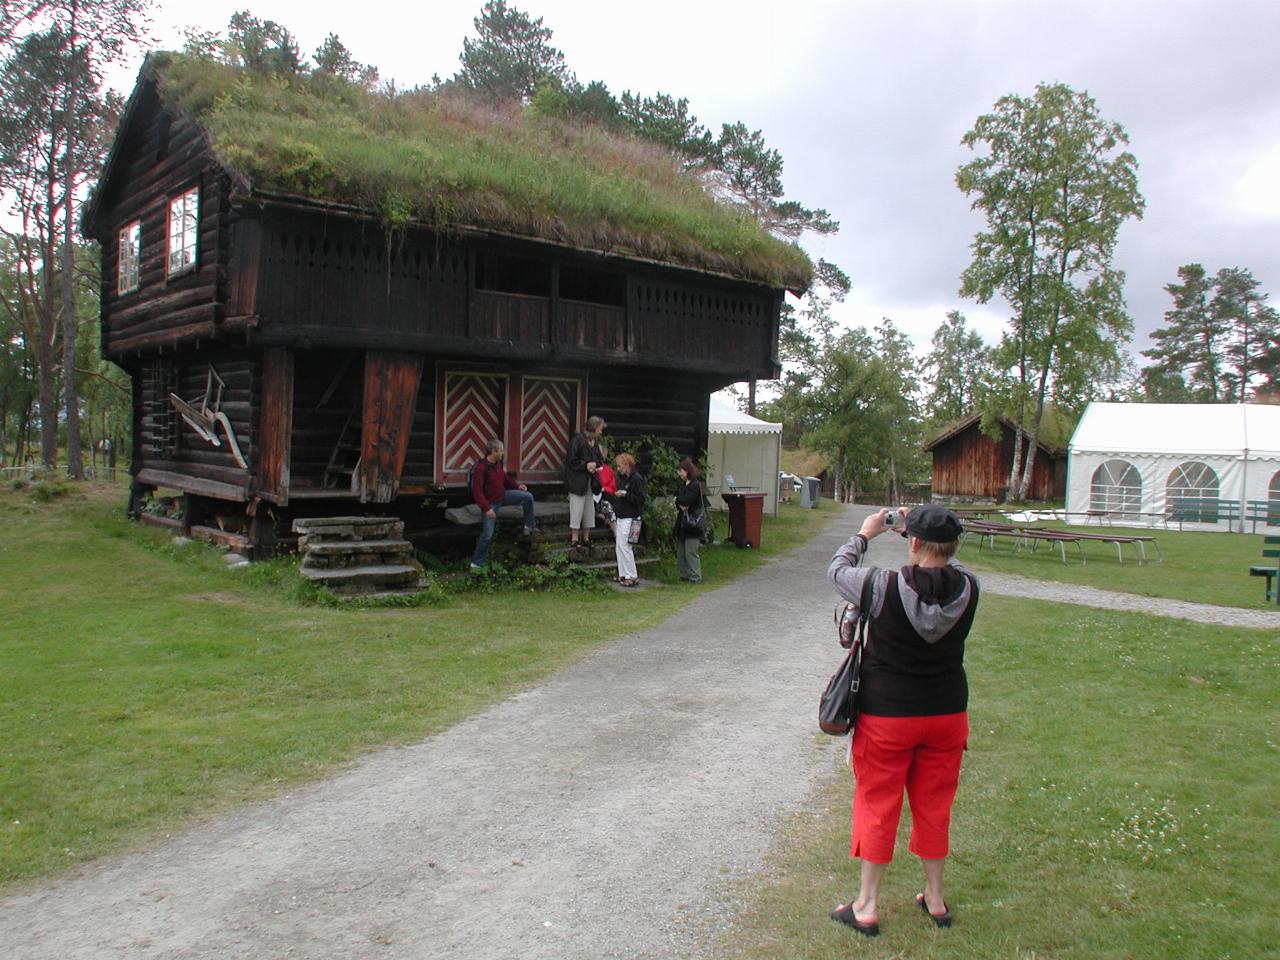 KPLU Viking Jazz: Barbara photographing Joey, Annette, Karren, Beverly adnd Signe at an old home in Romsdalmuseet, Molde